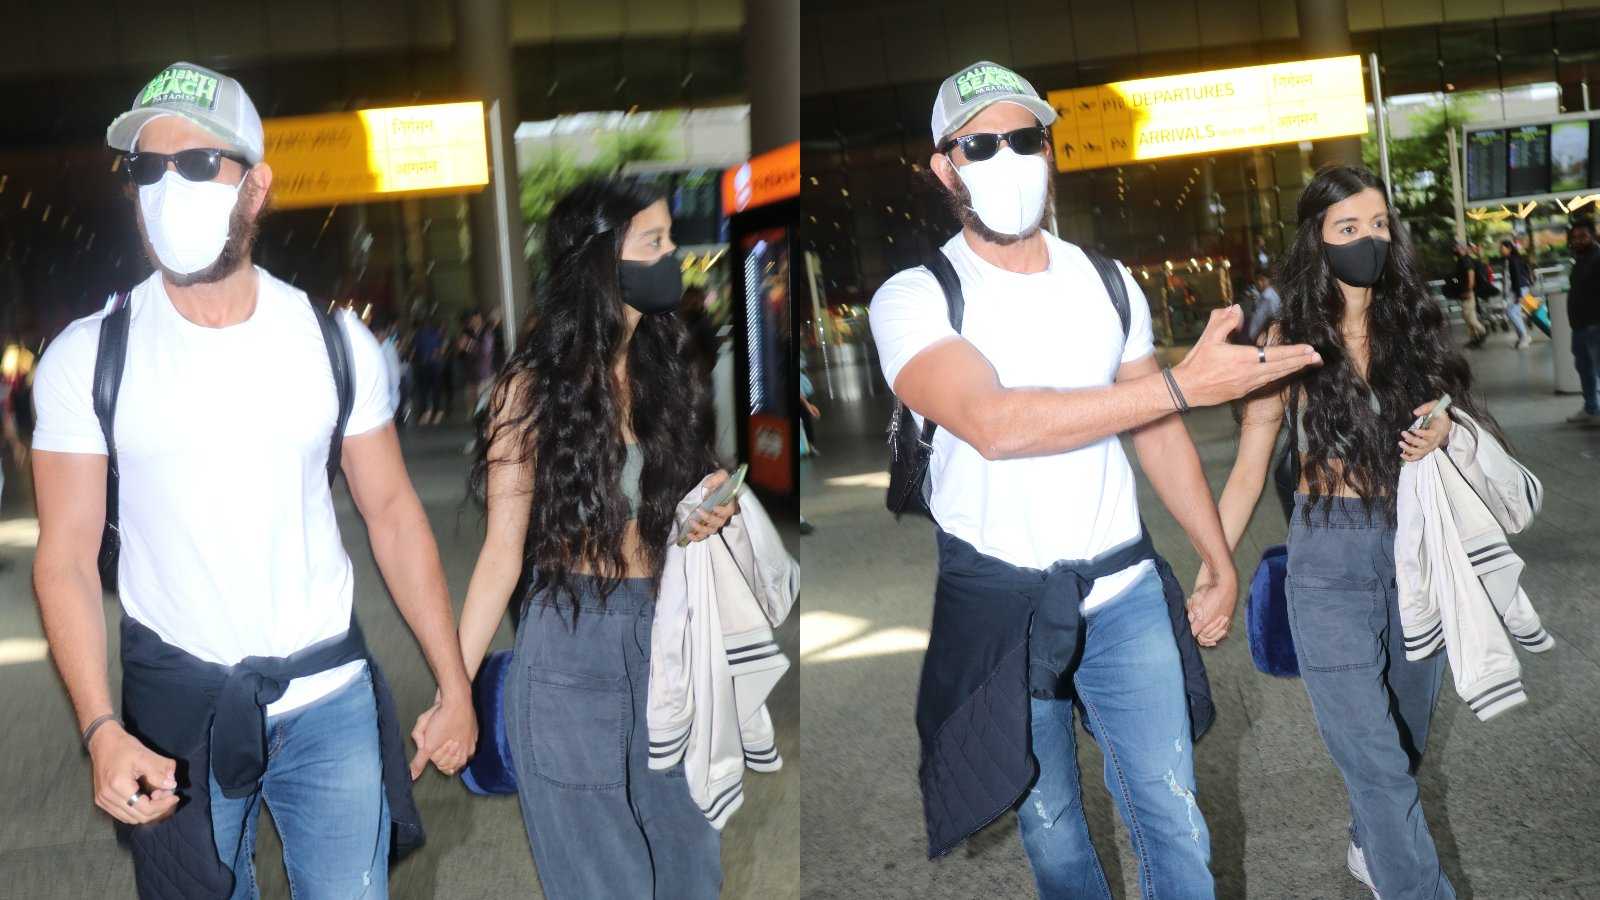 Hrithik Roshan and Saba Azad exit Mumbai airport hand in hand; netizens correct paparazzo who calls her his 'rumored girlfriend'